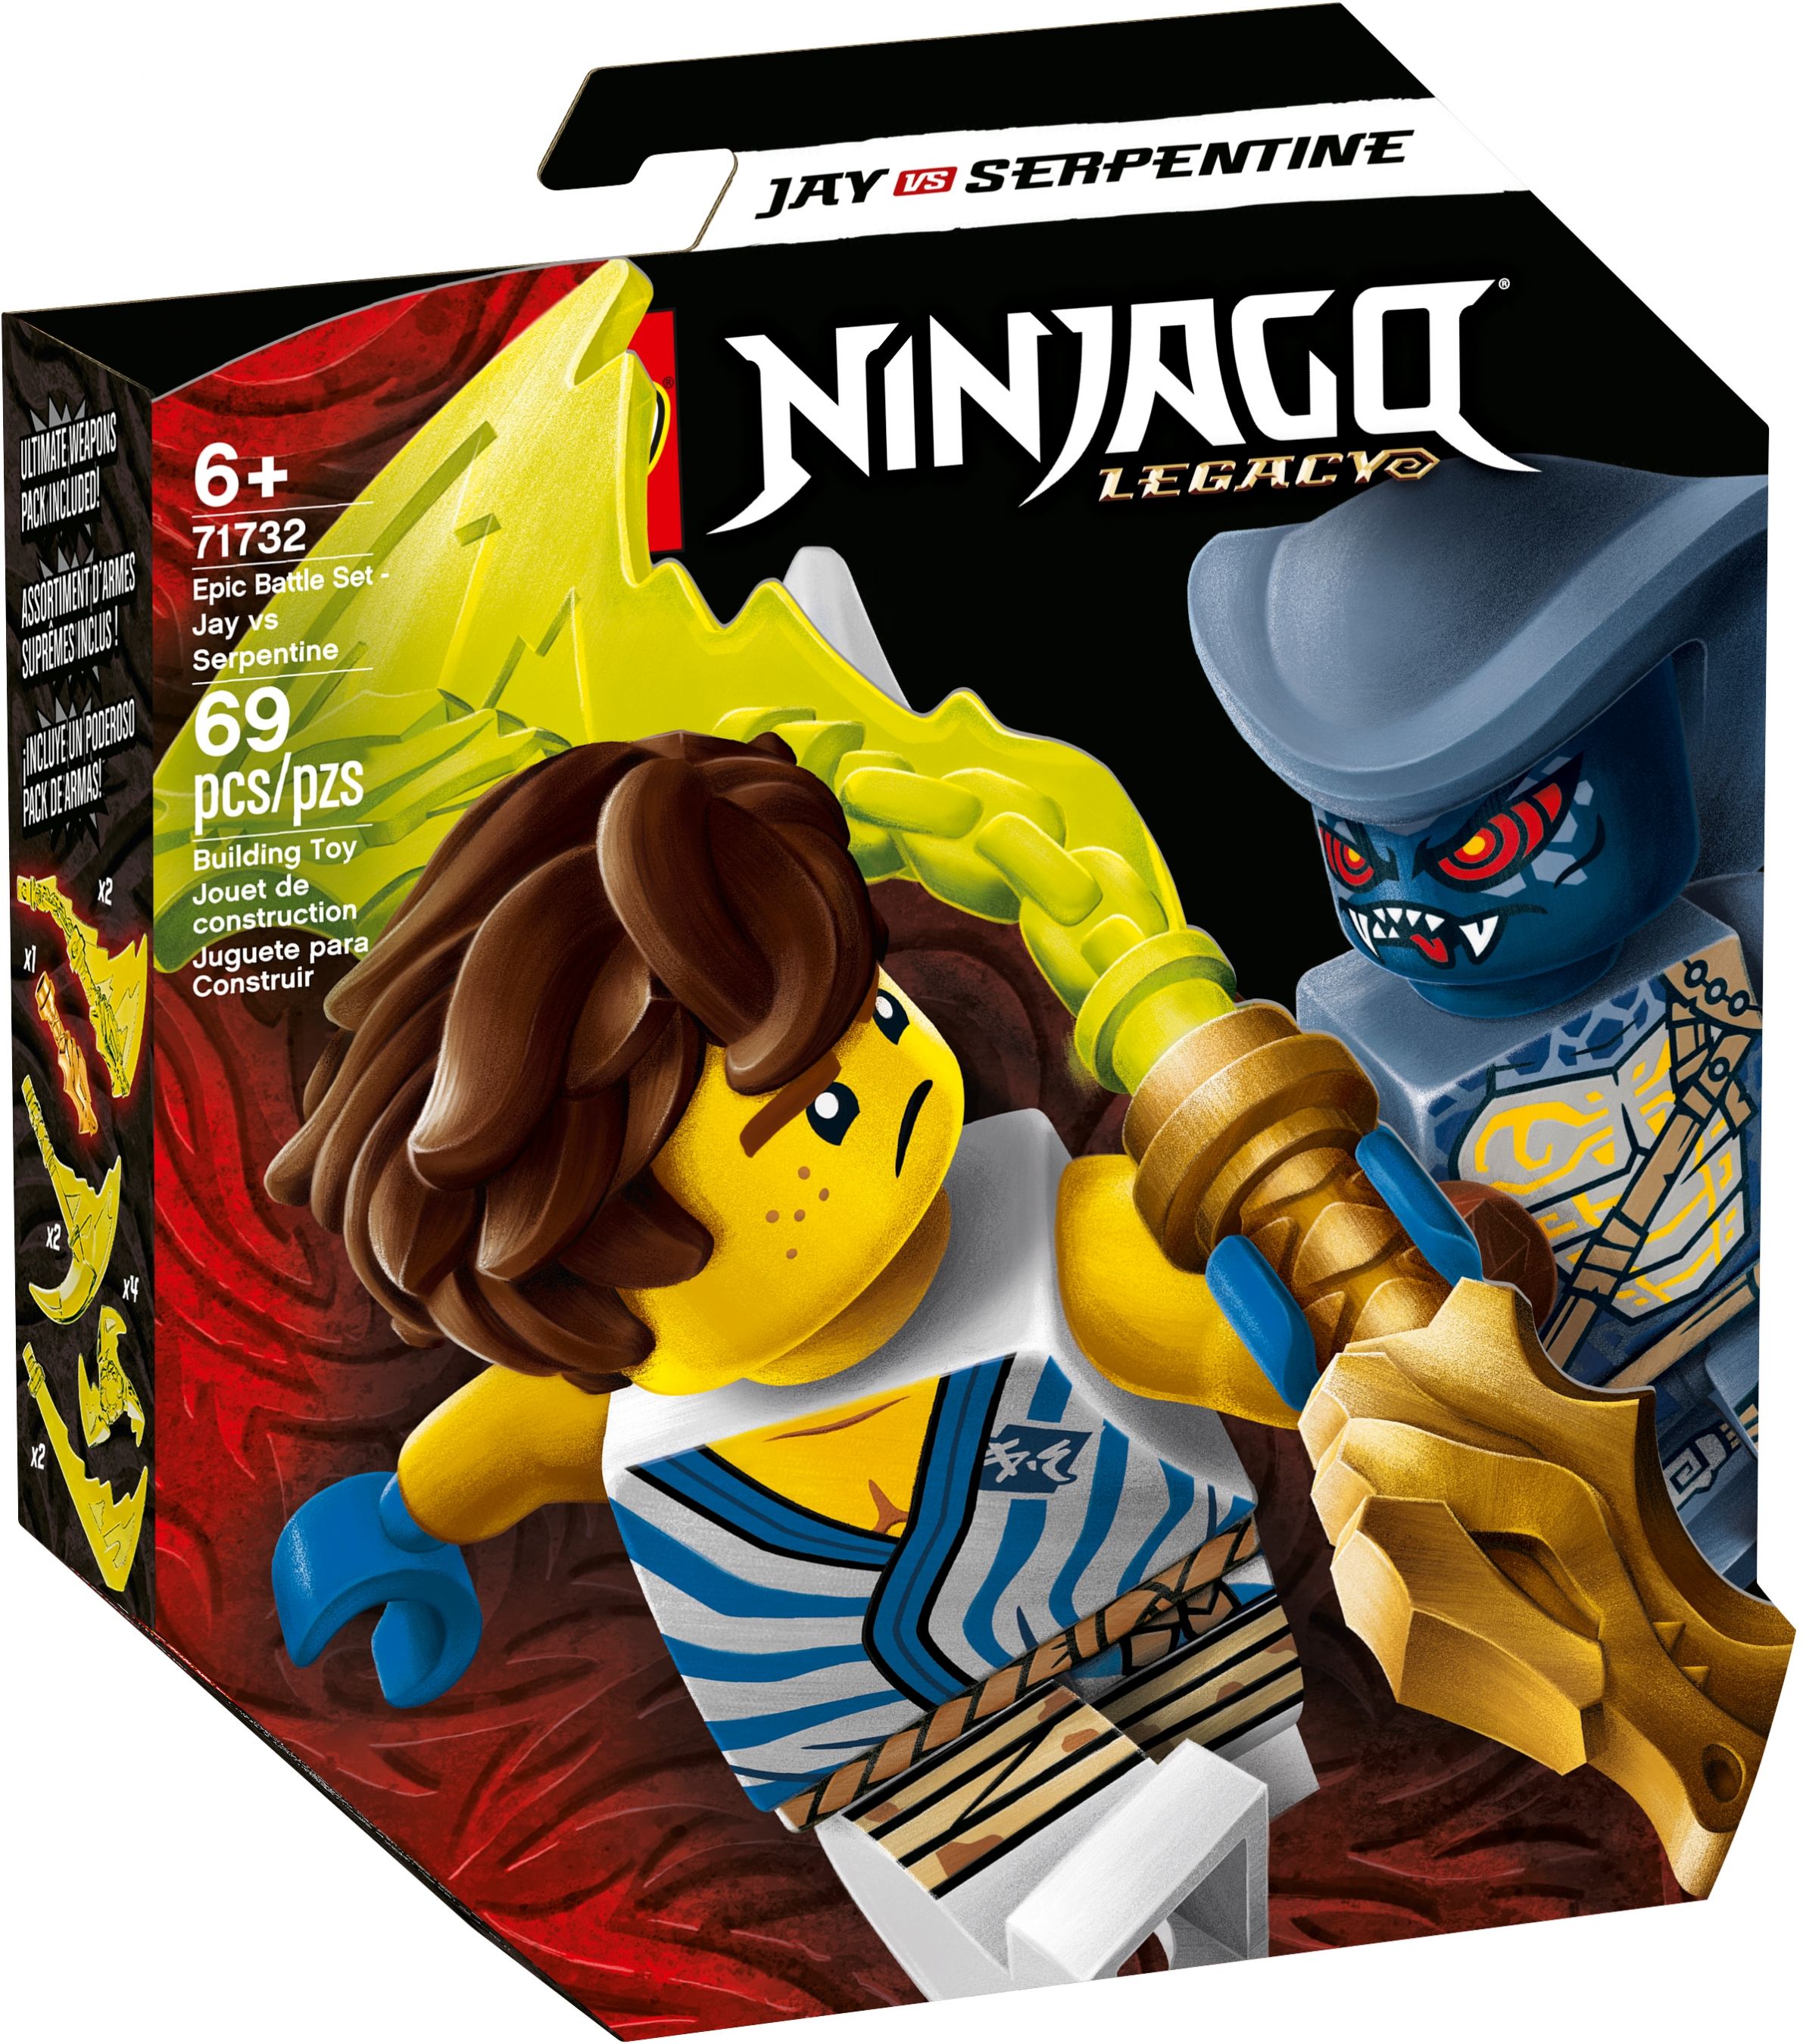 LEGO Ninjago 71732 Battle Set: Jay vs. Serpentine LEGO_71732_alt1.jpg